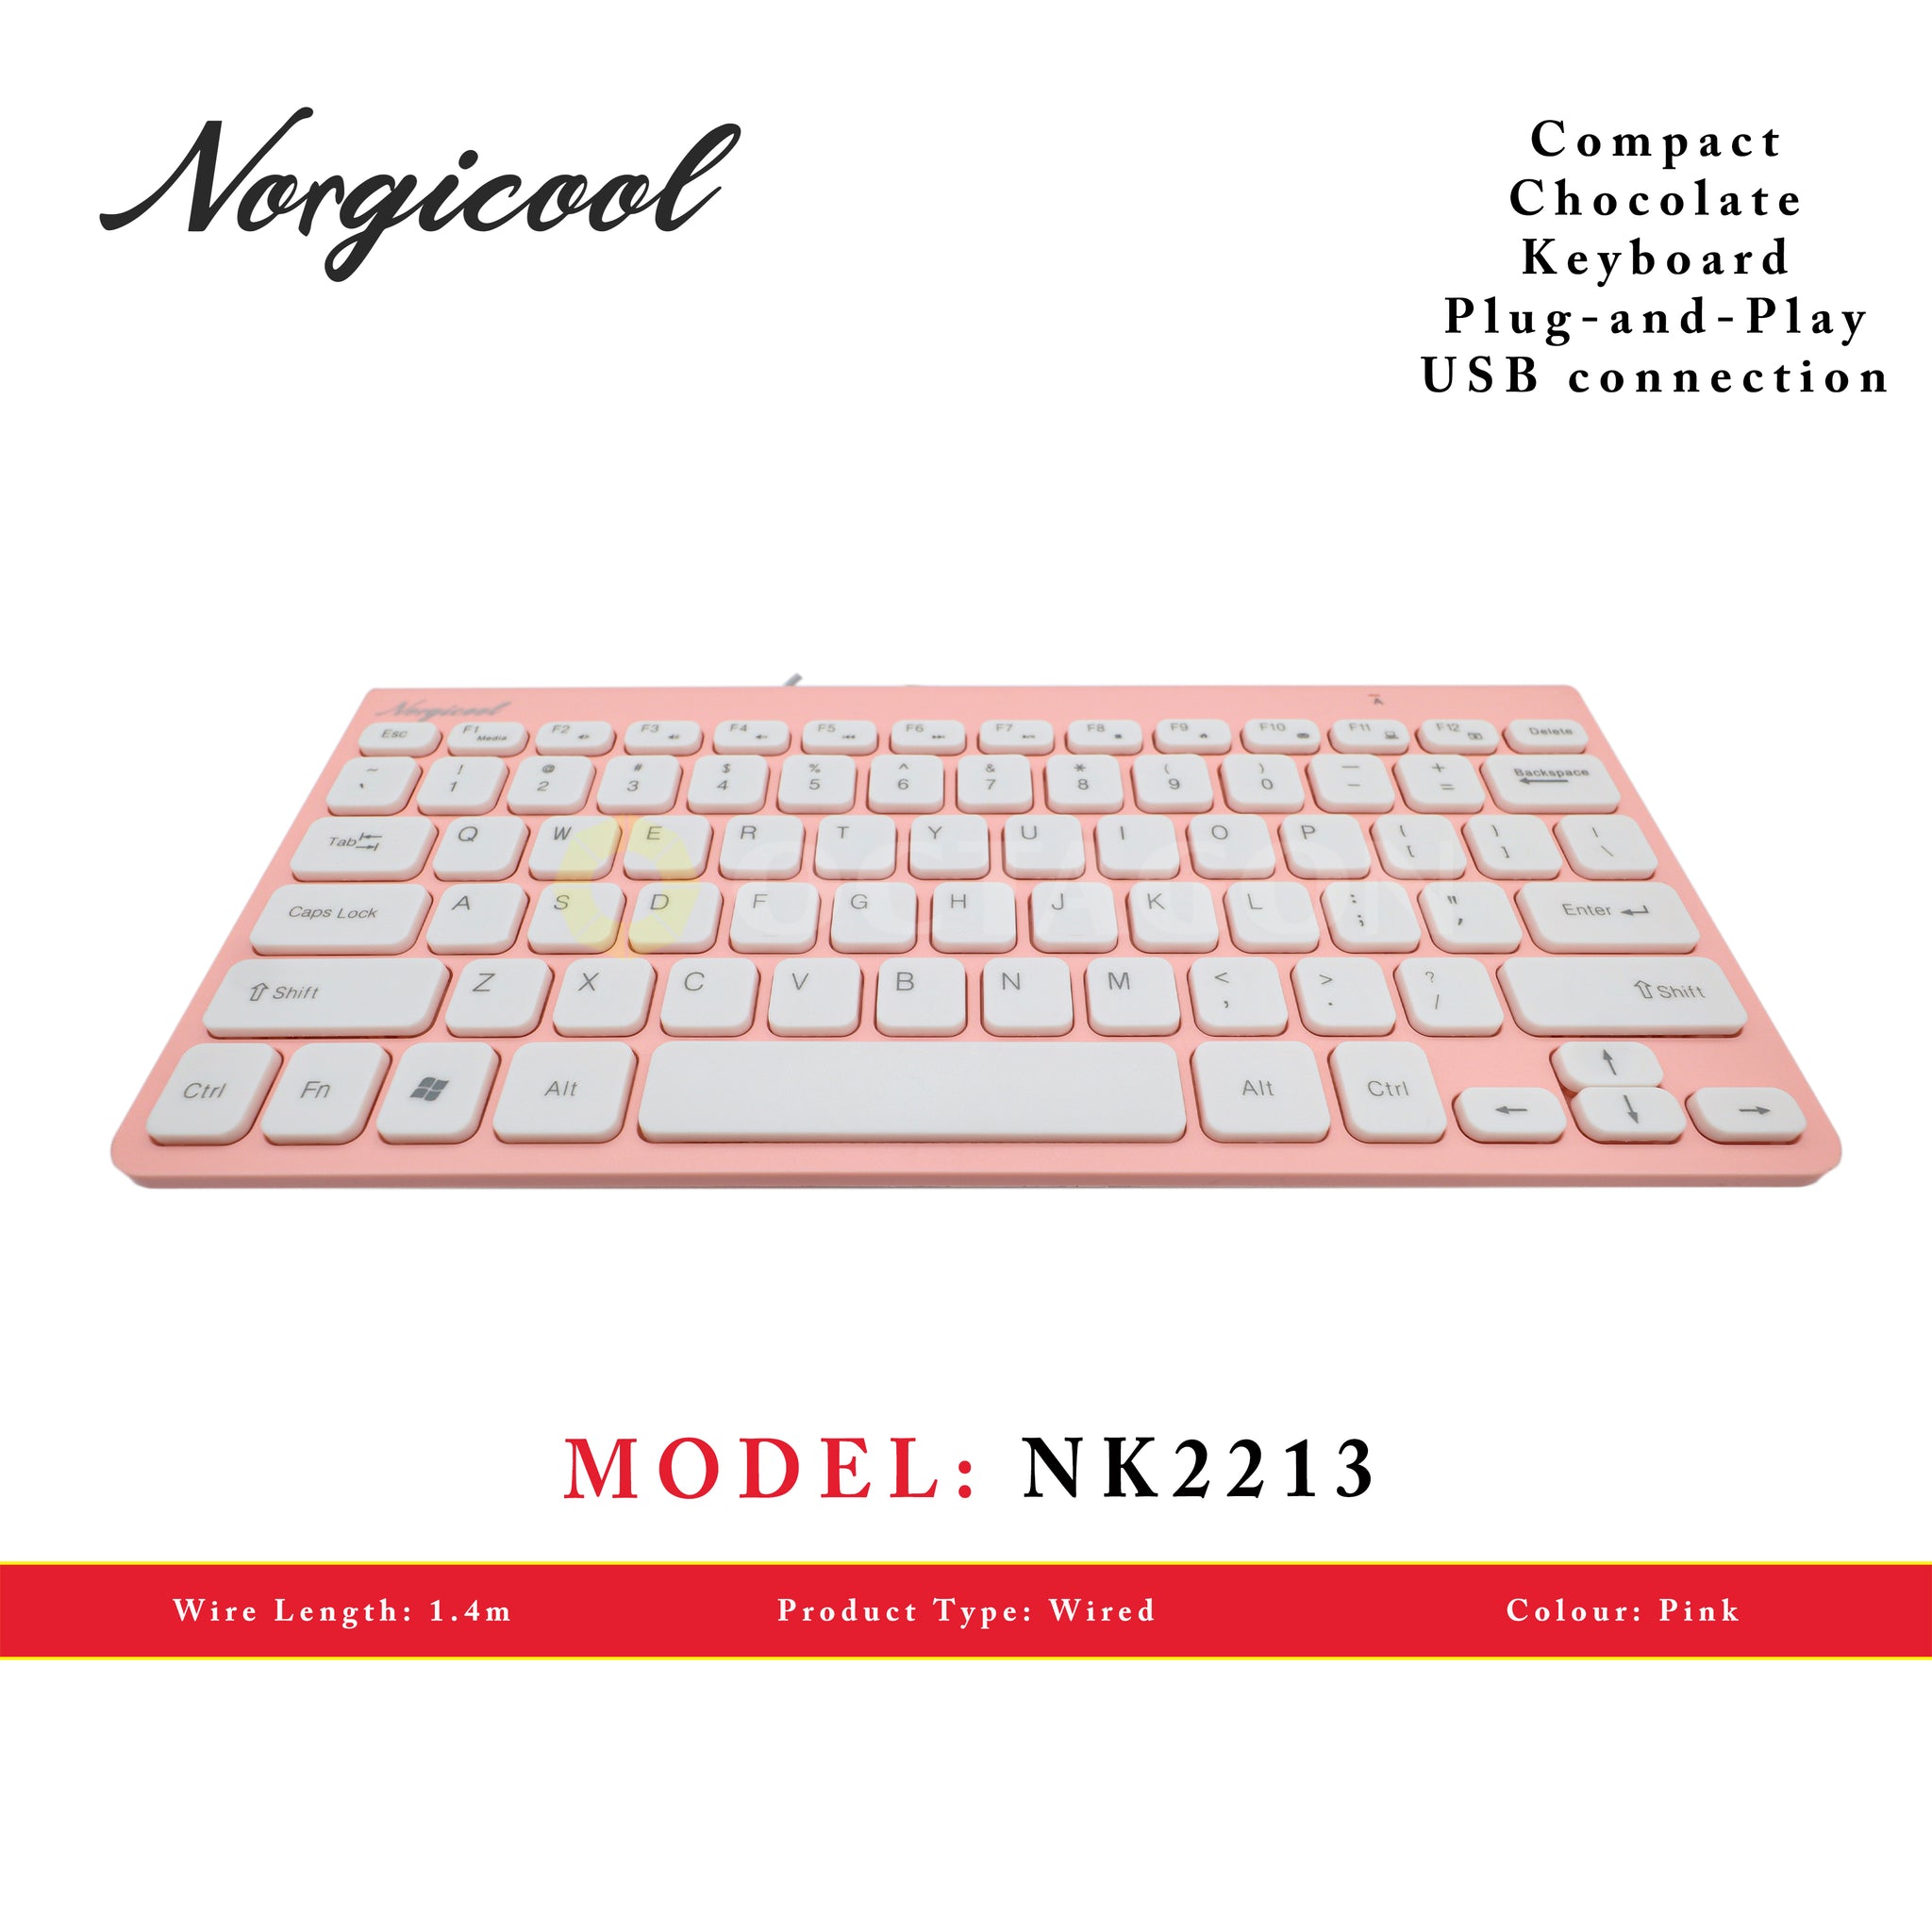 NORGICOOL NK2213-PK USB KEYBOARD COMPACT